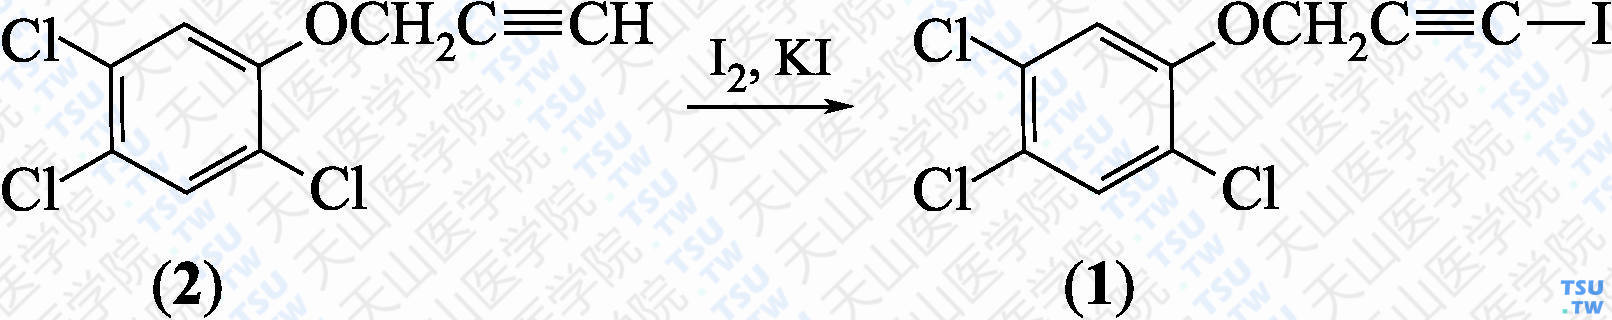 2，4，5-三氯苯基-<i>γ</i>-碘代丙炔醚（分子式：C<sub>9</sub>H<sub>4</sub>Cl<sub>3</sub>IO）的合成方法路线及其结构式